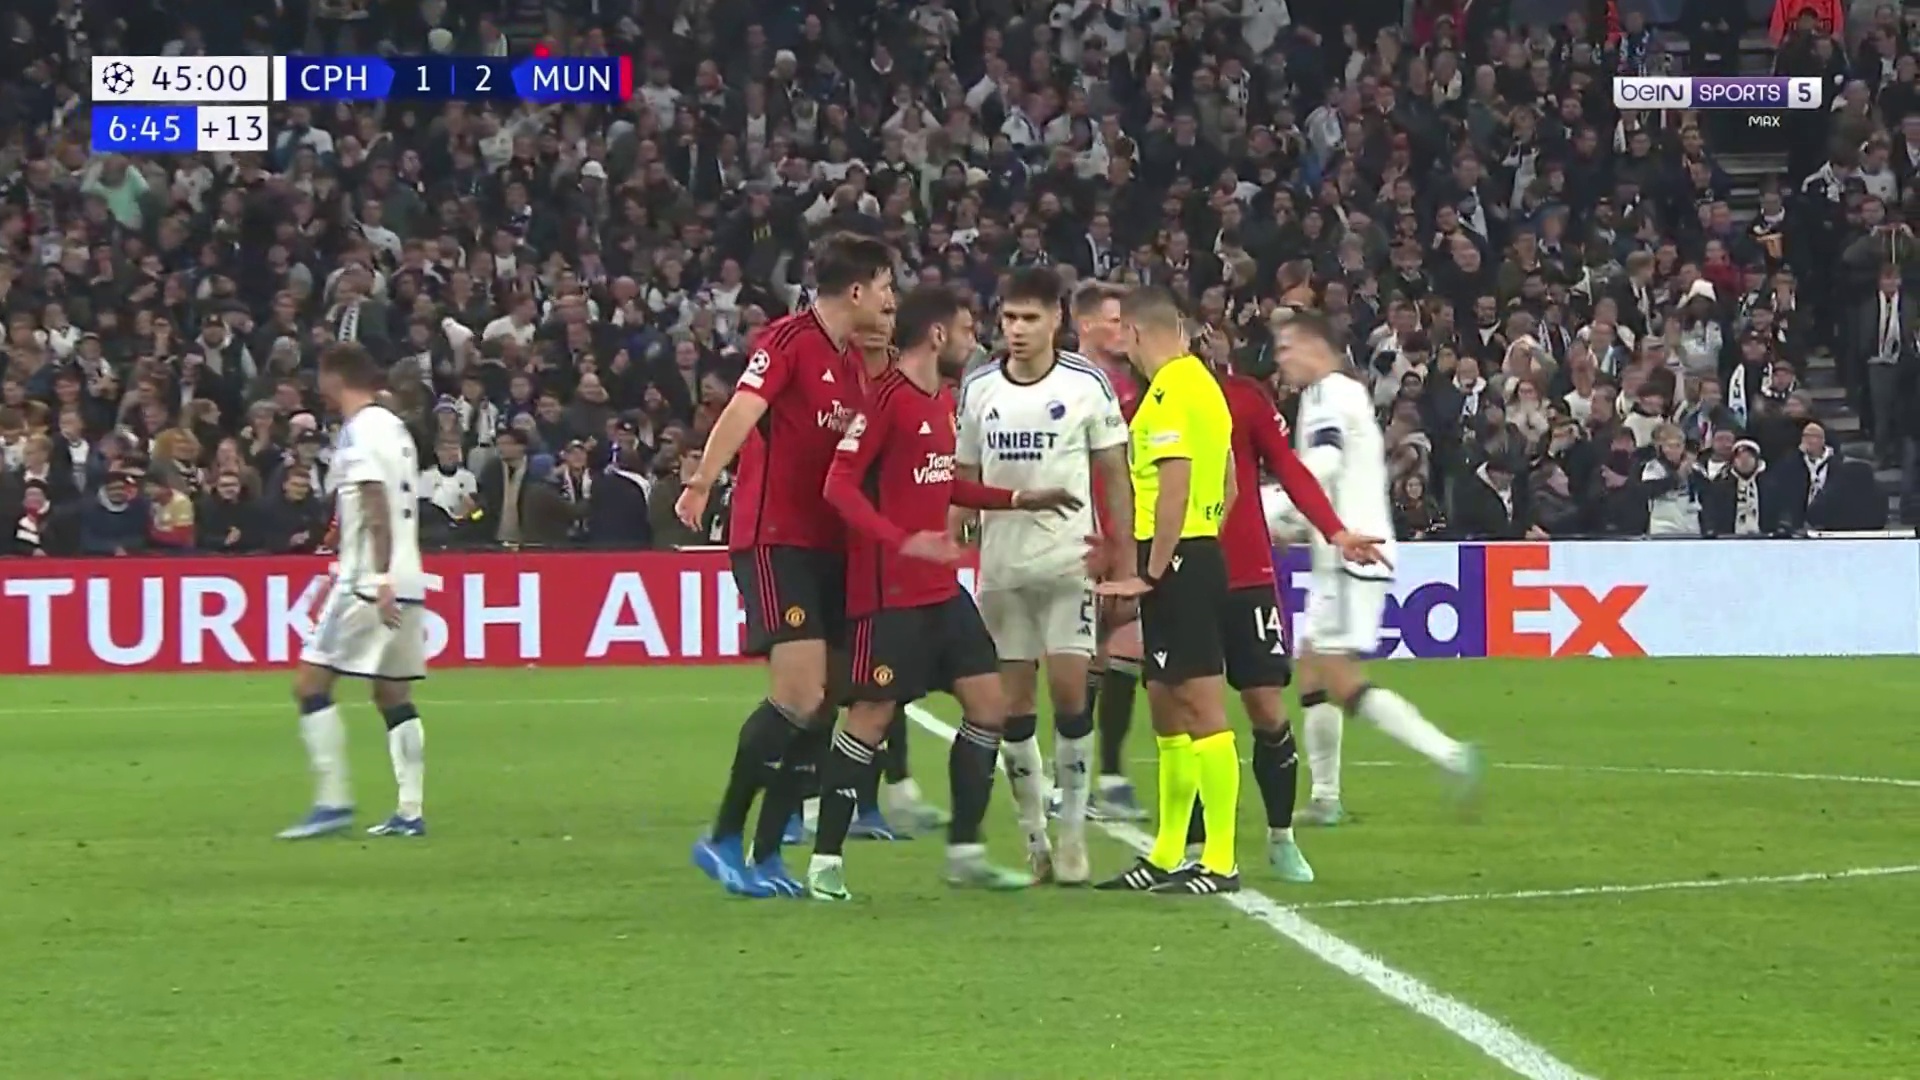 Copenhagen [2] - 2 Manchester United - Diogo Goncalves penalty 45+9'